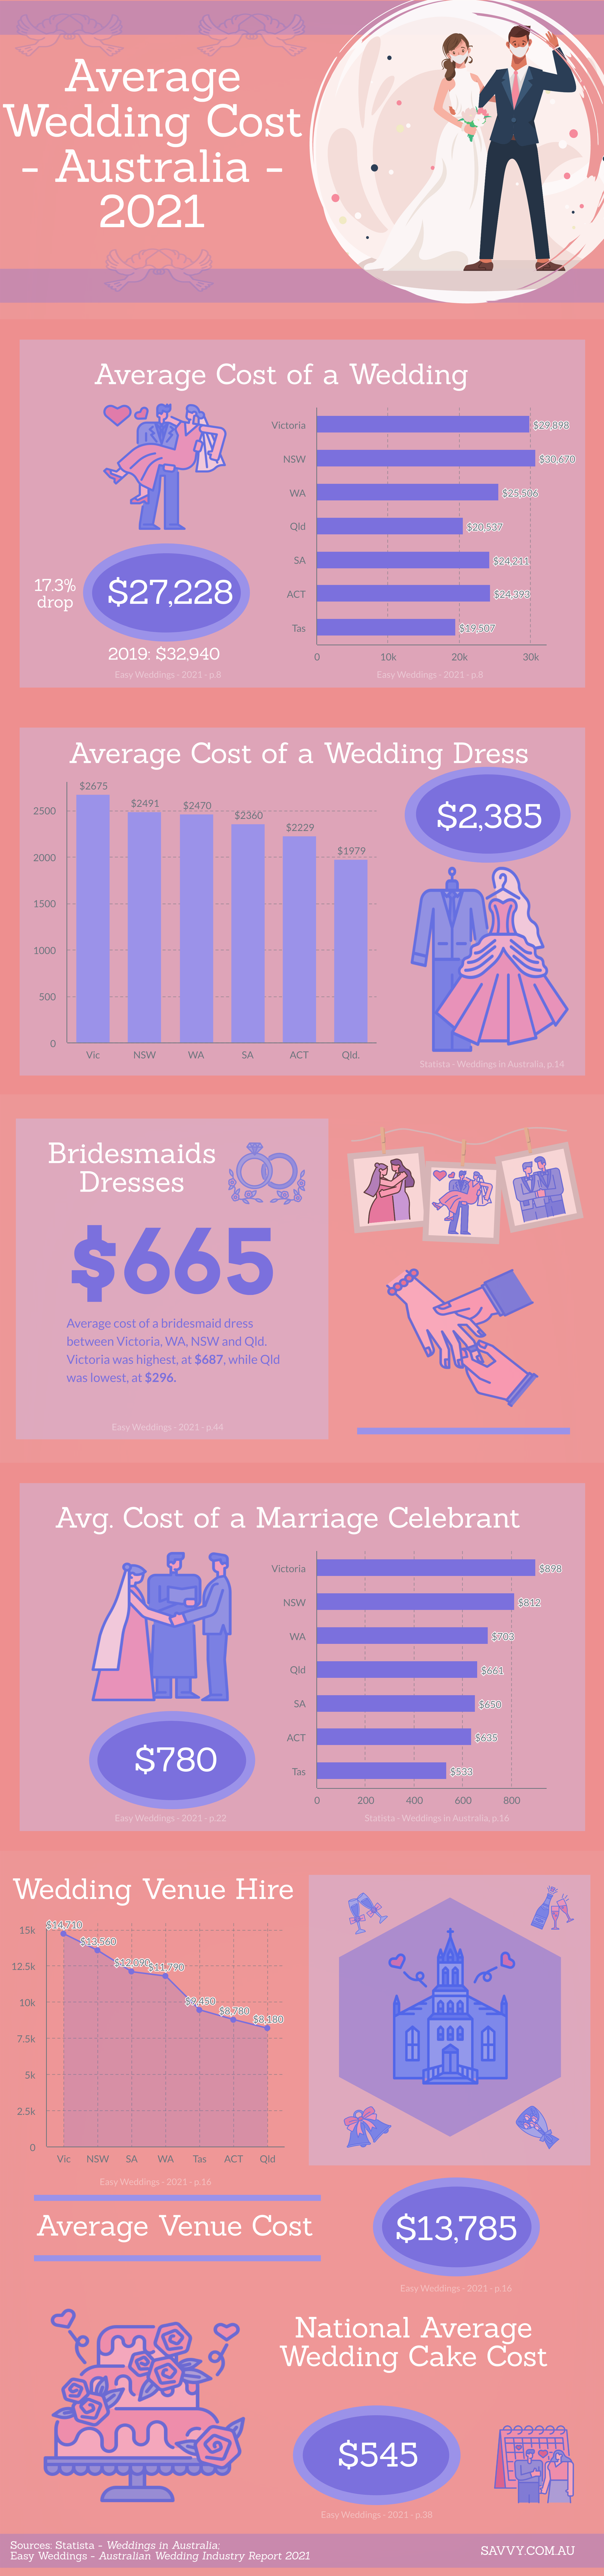 Australian Wedding Costs 2021 Infographic